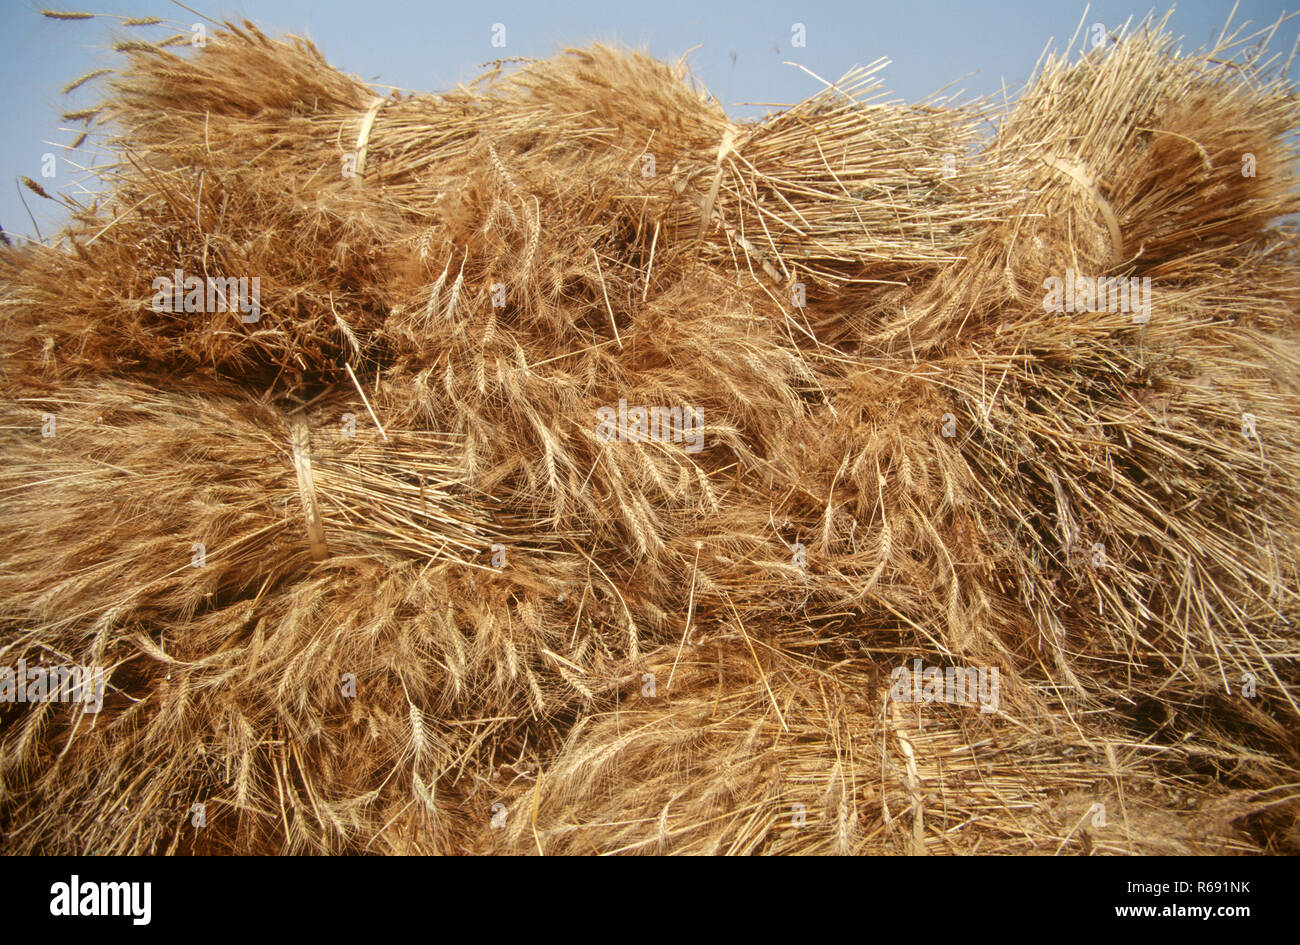 Cosecha de trigo cosechada, India, Asia Foto de stock